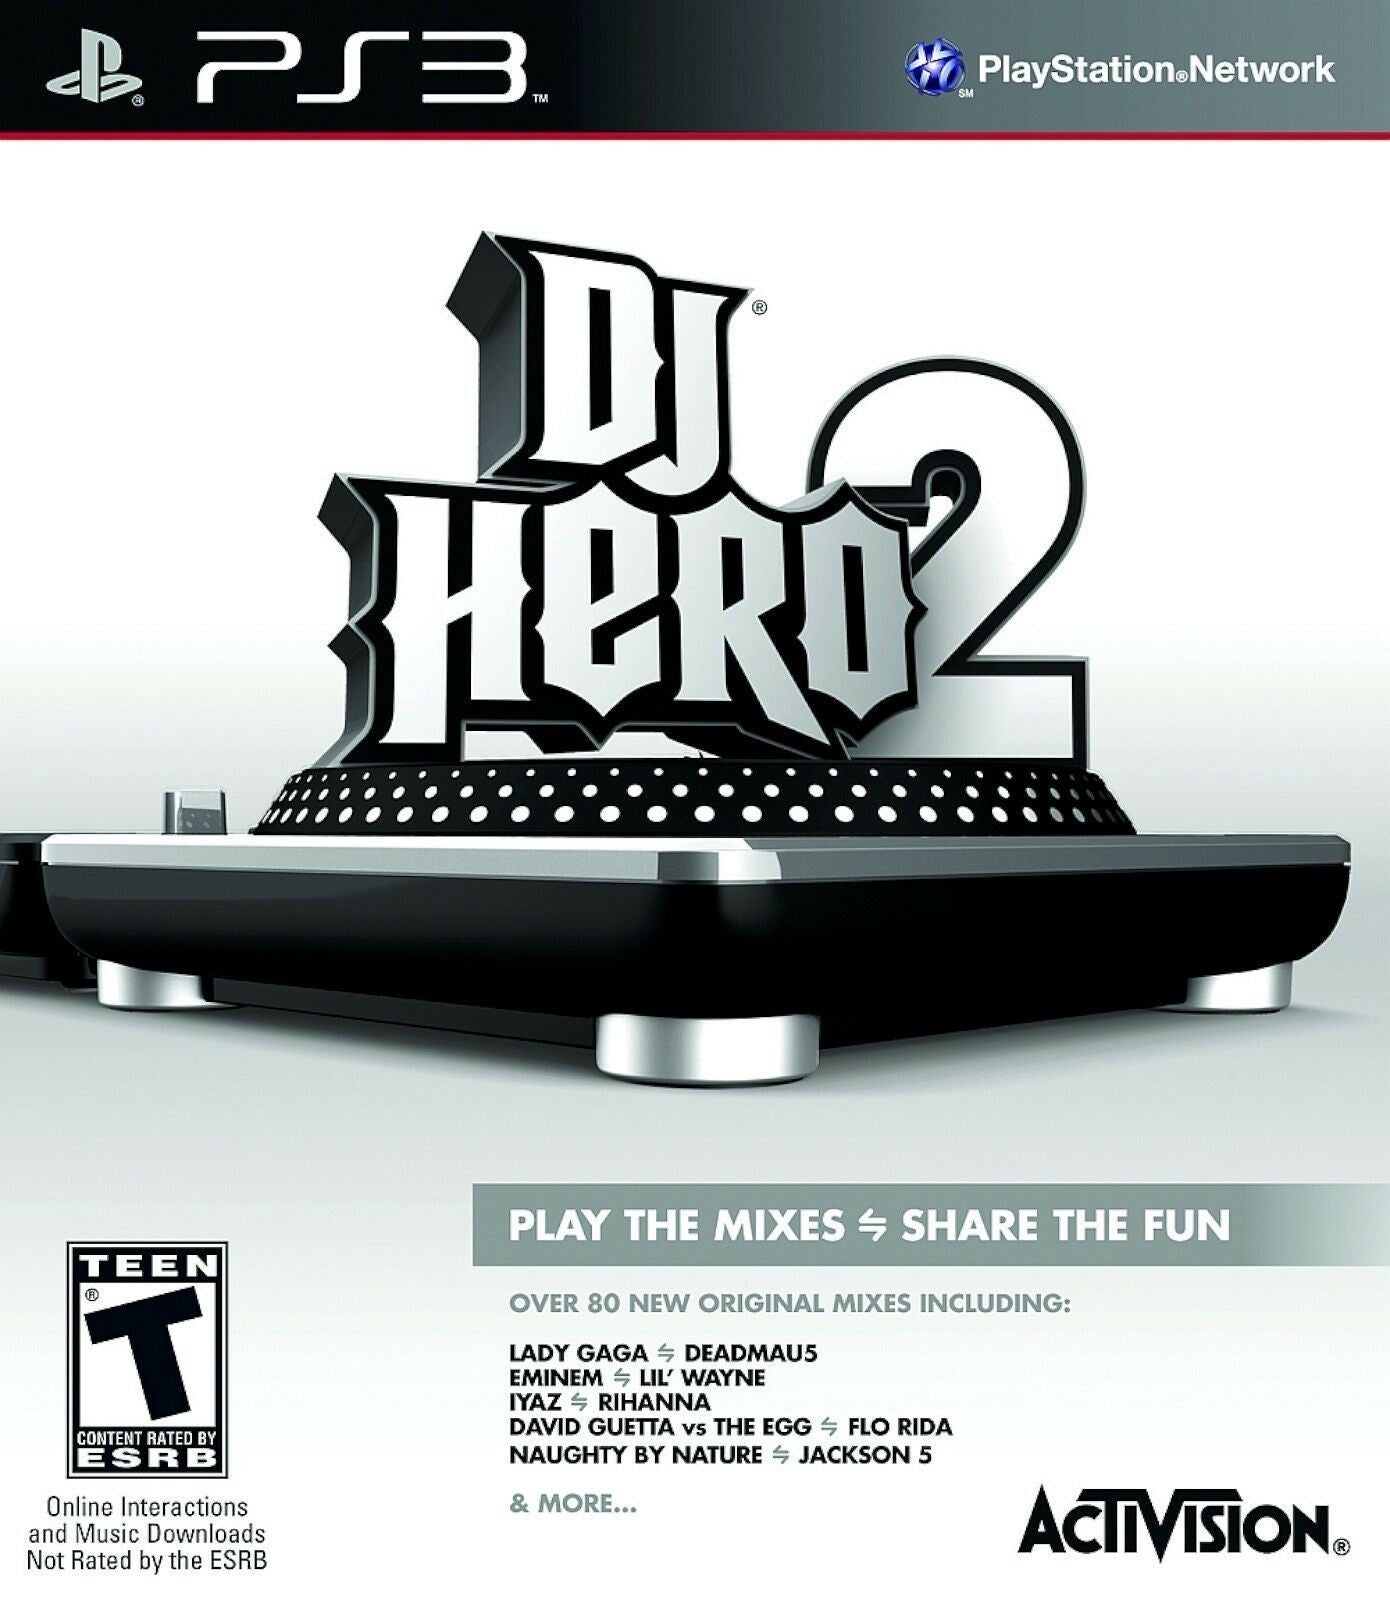 DJ Hero 2 Sony Playstation-3 PS3 Video Game pitbull 50 cent rihanna justice